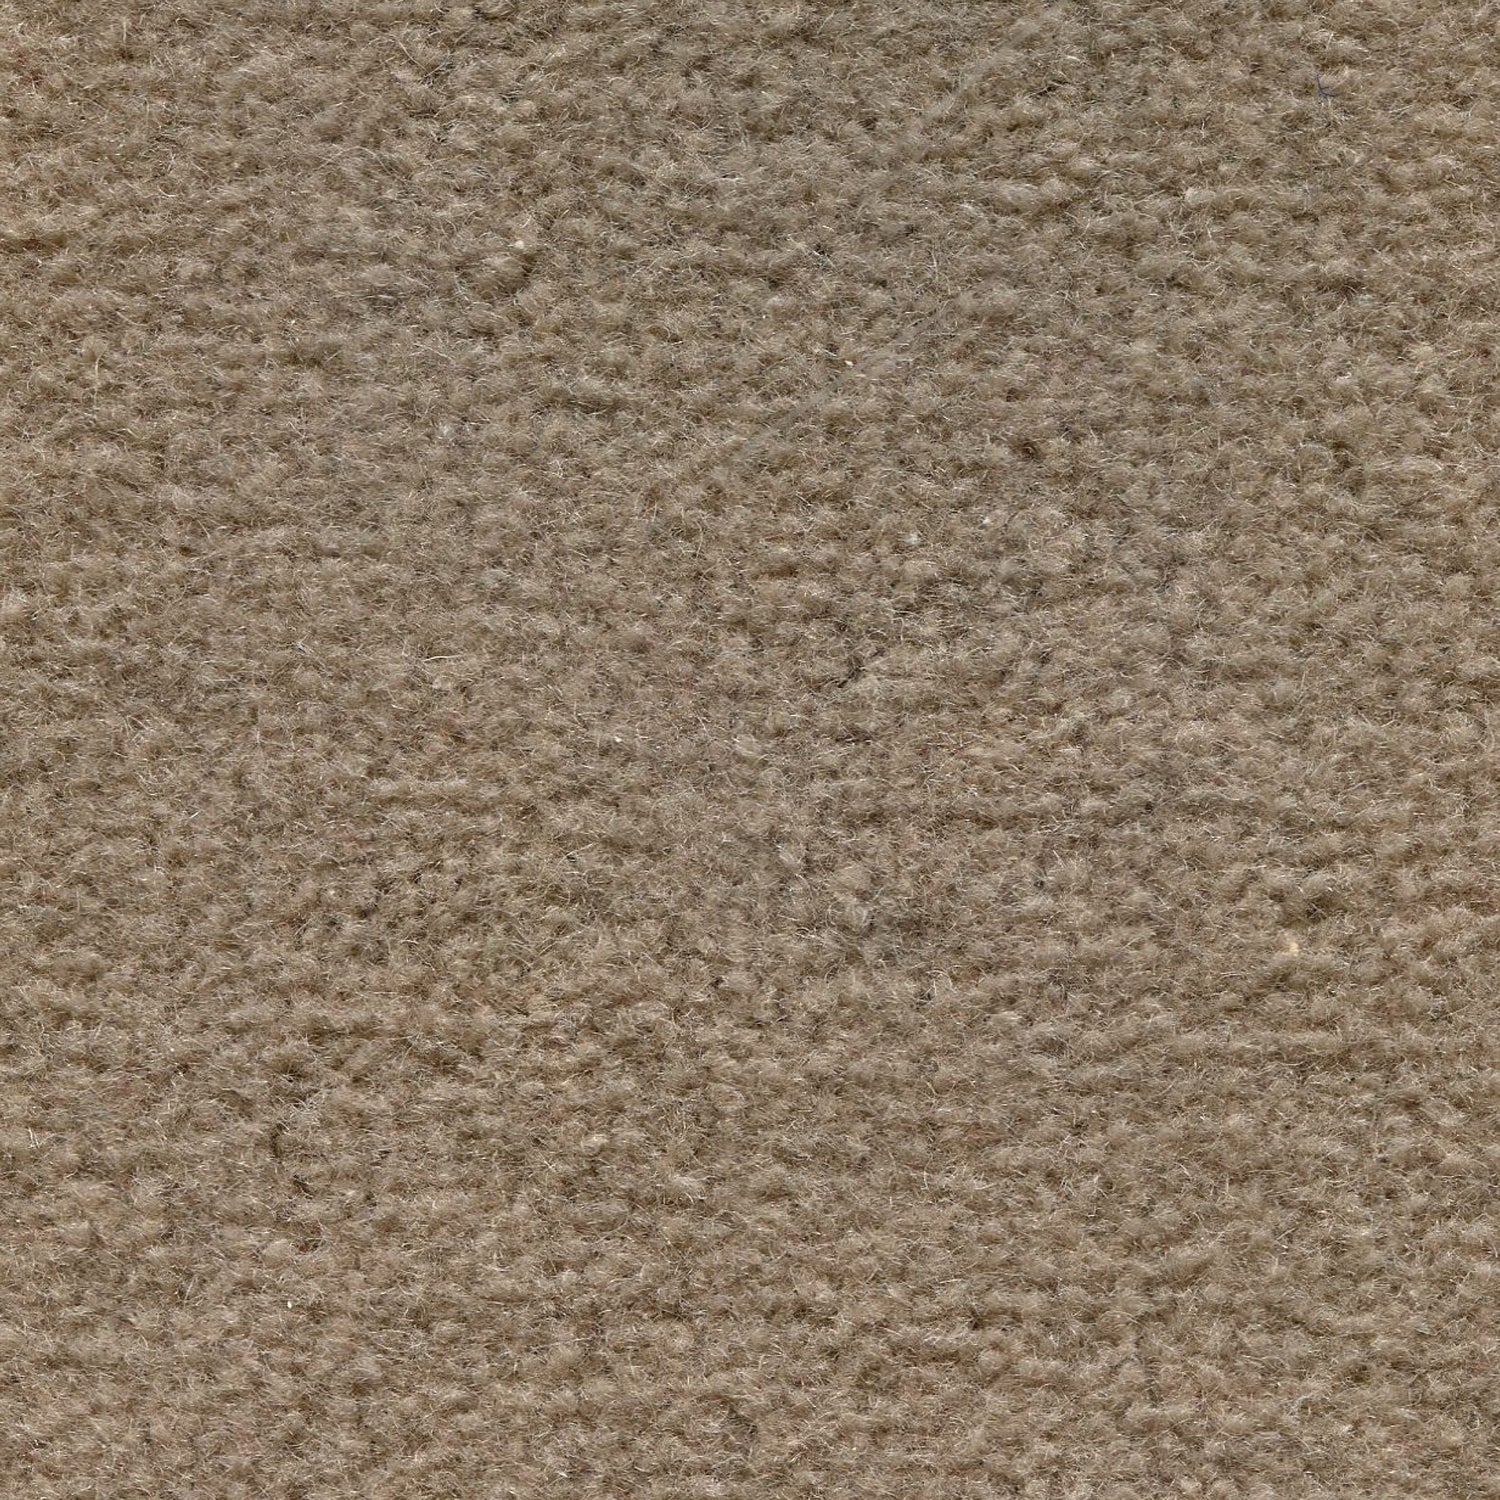 Wool broadloom carpet swatch in a cut pile texture in sable.